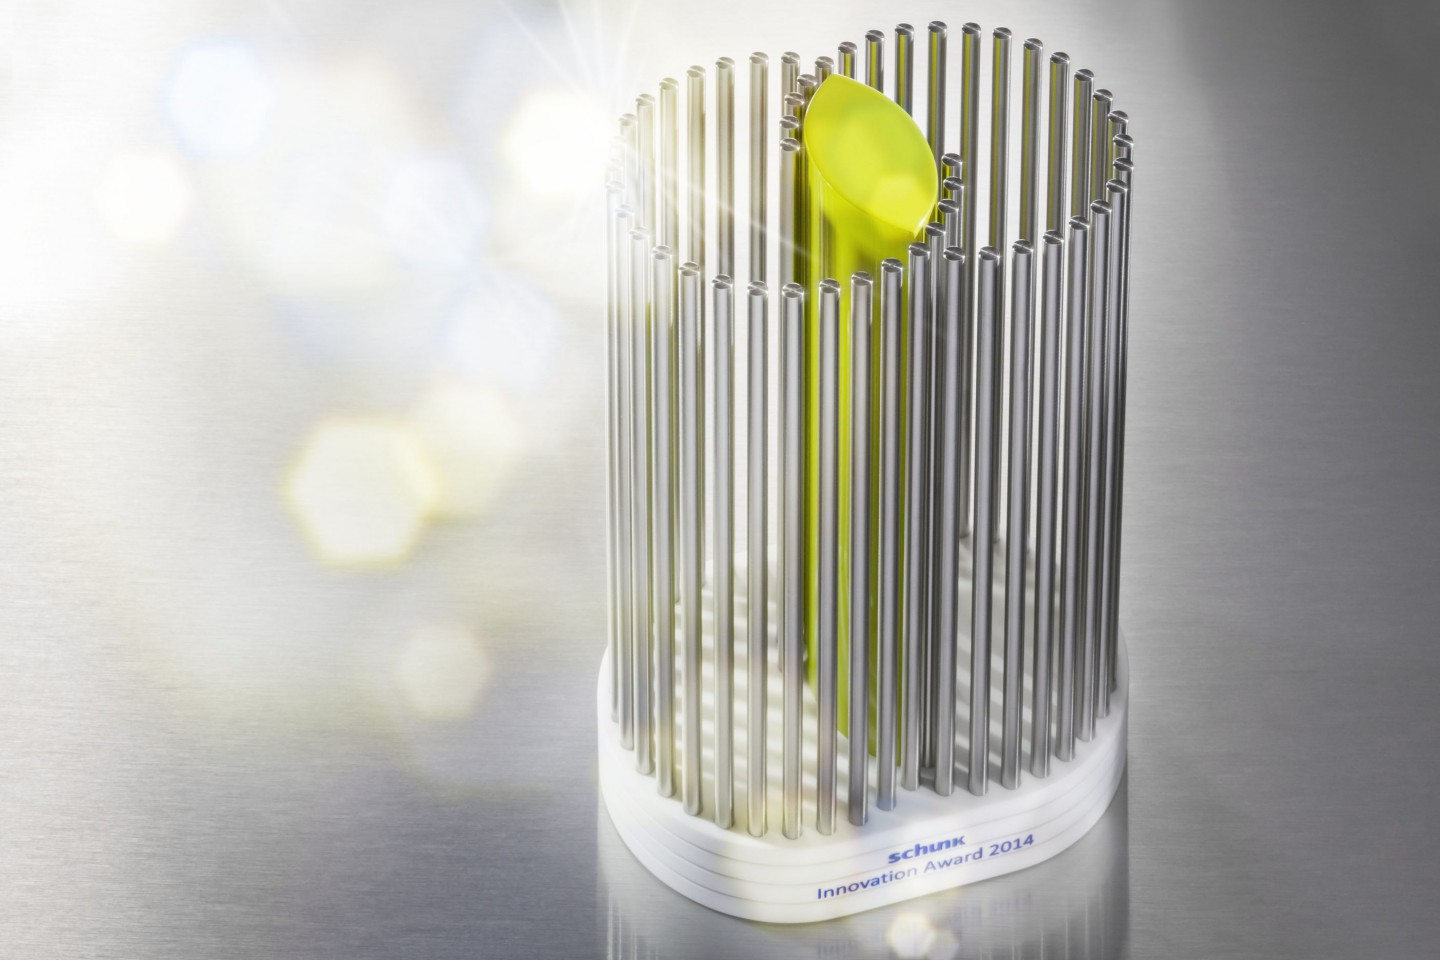 ‘Schunk Innovation Award’ trophy